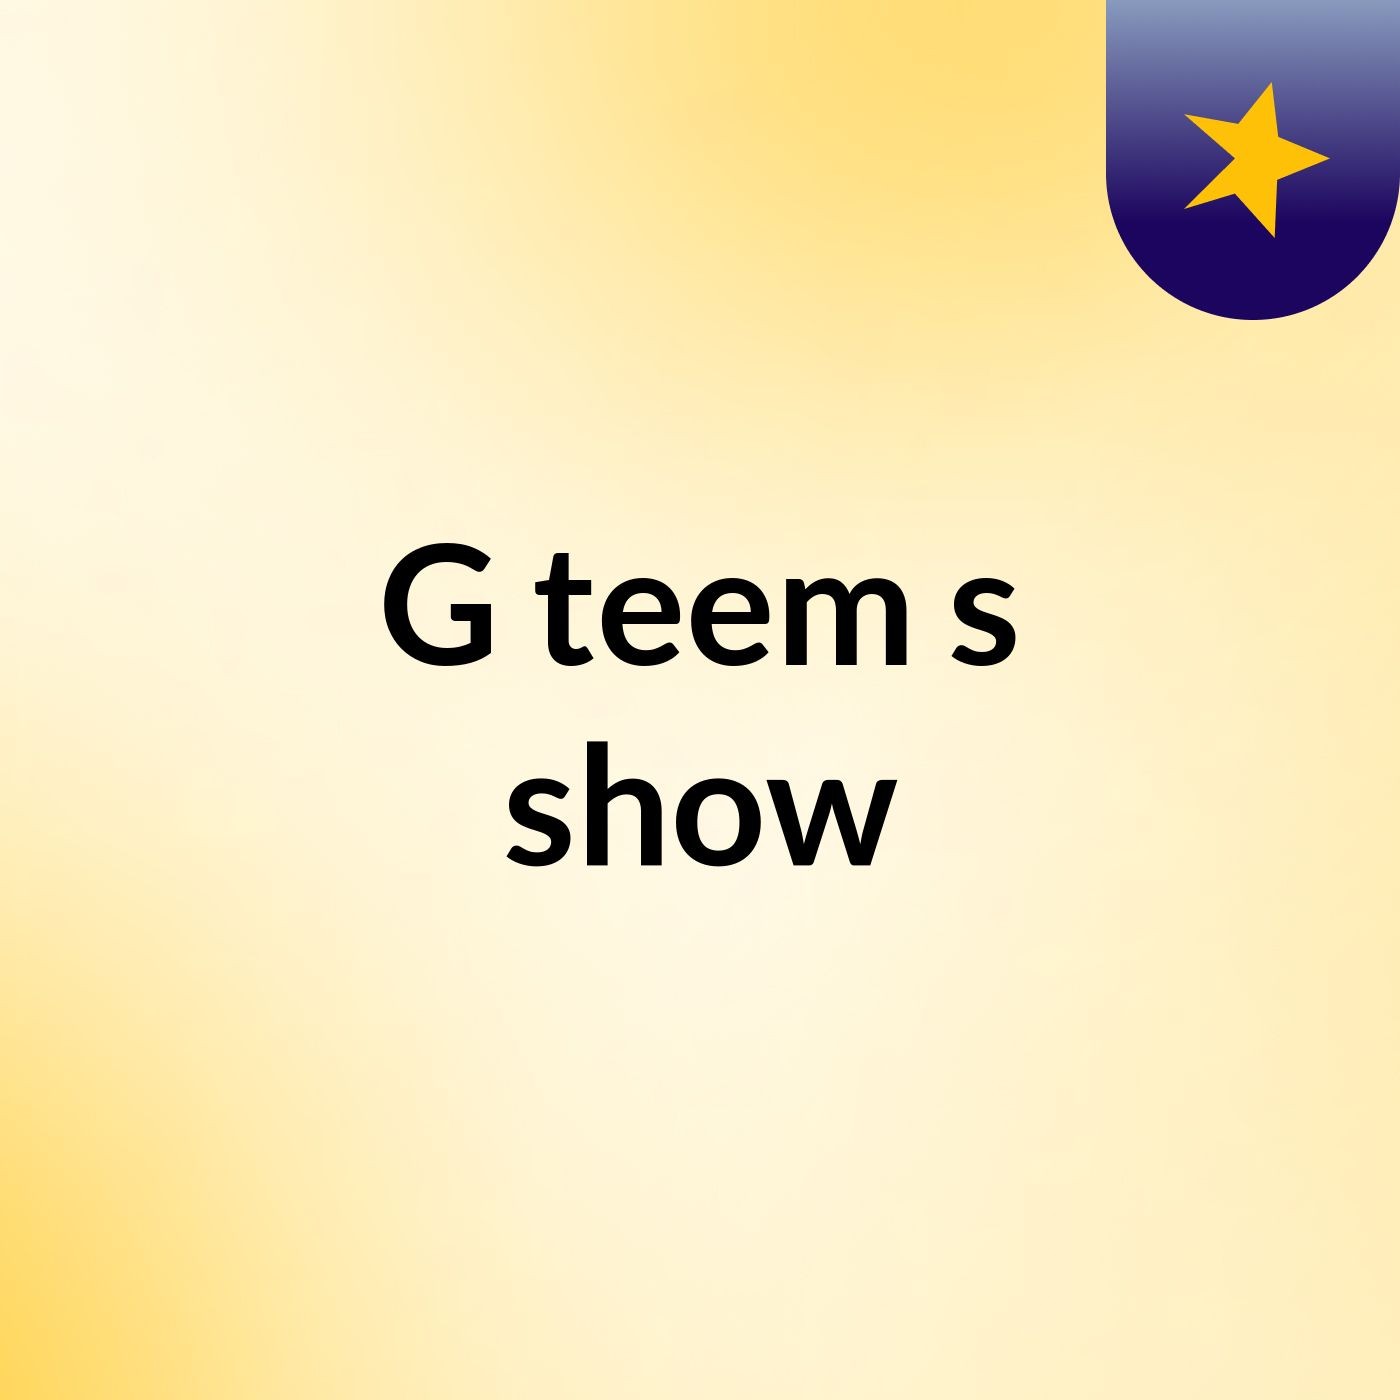 G teem's show